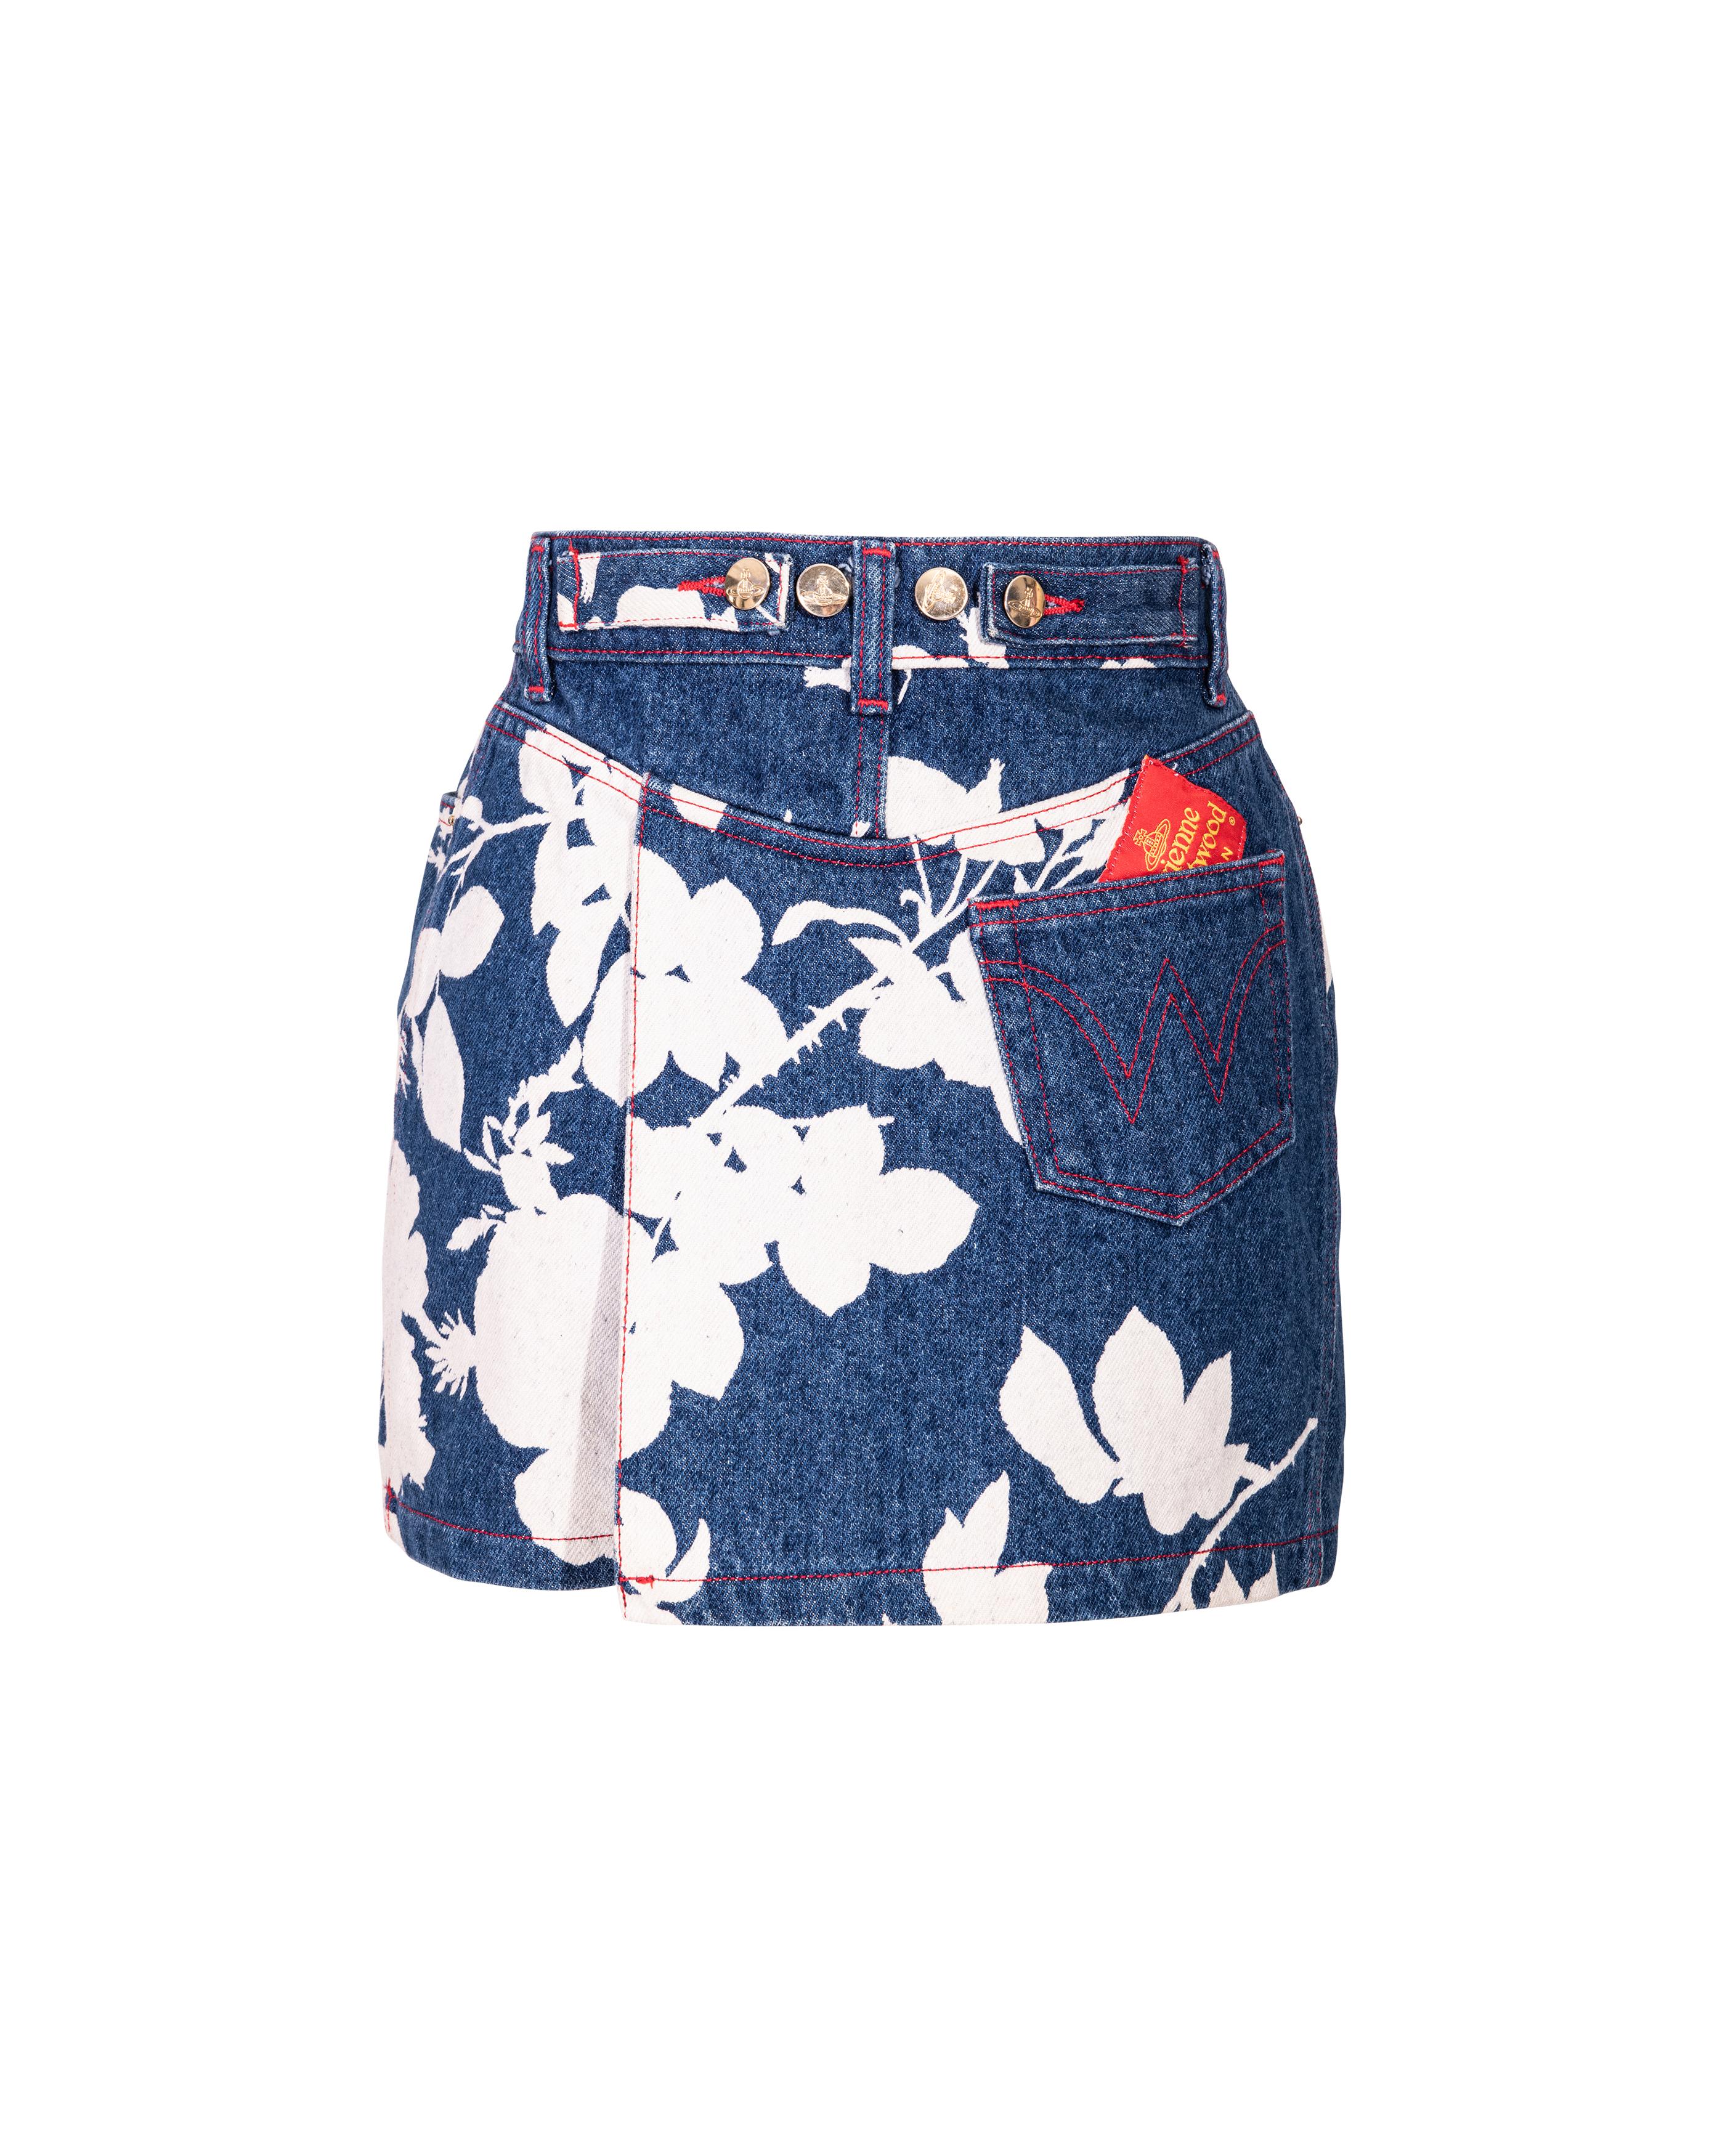 S/S 1994 Vivienne Westwood Denim Skirt Set with Bleached Floral Pattern 2